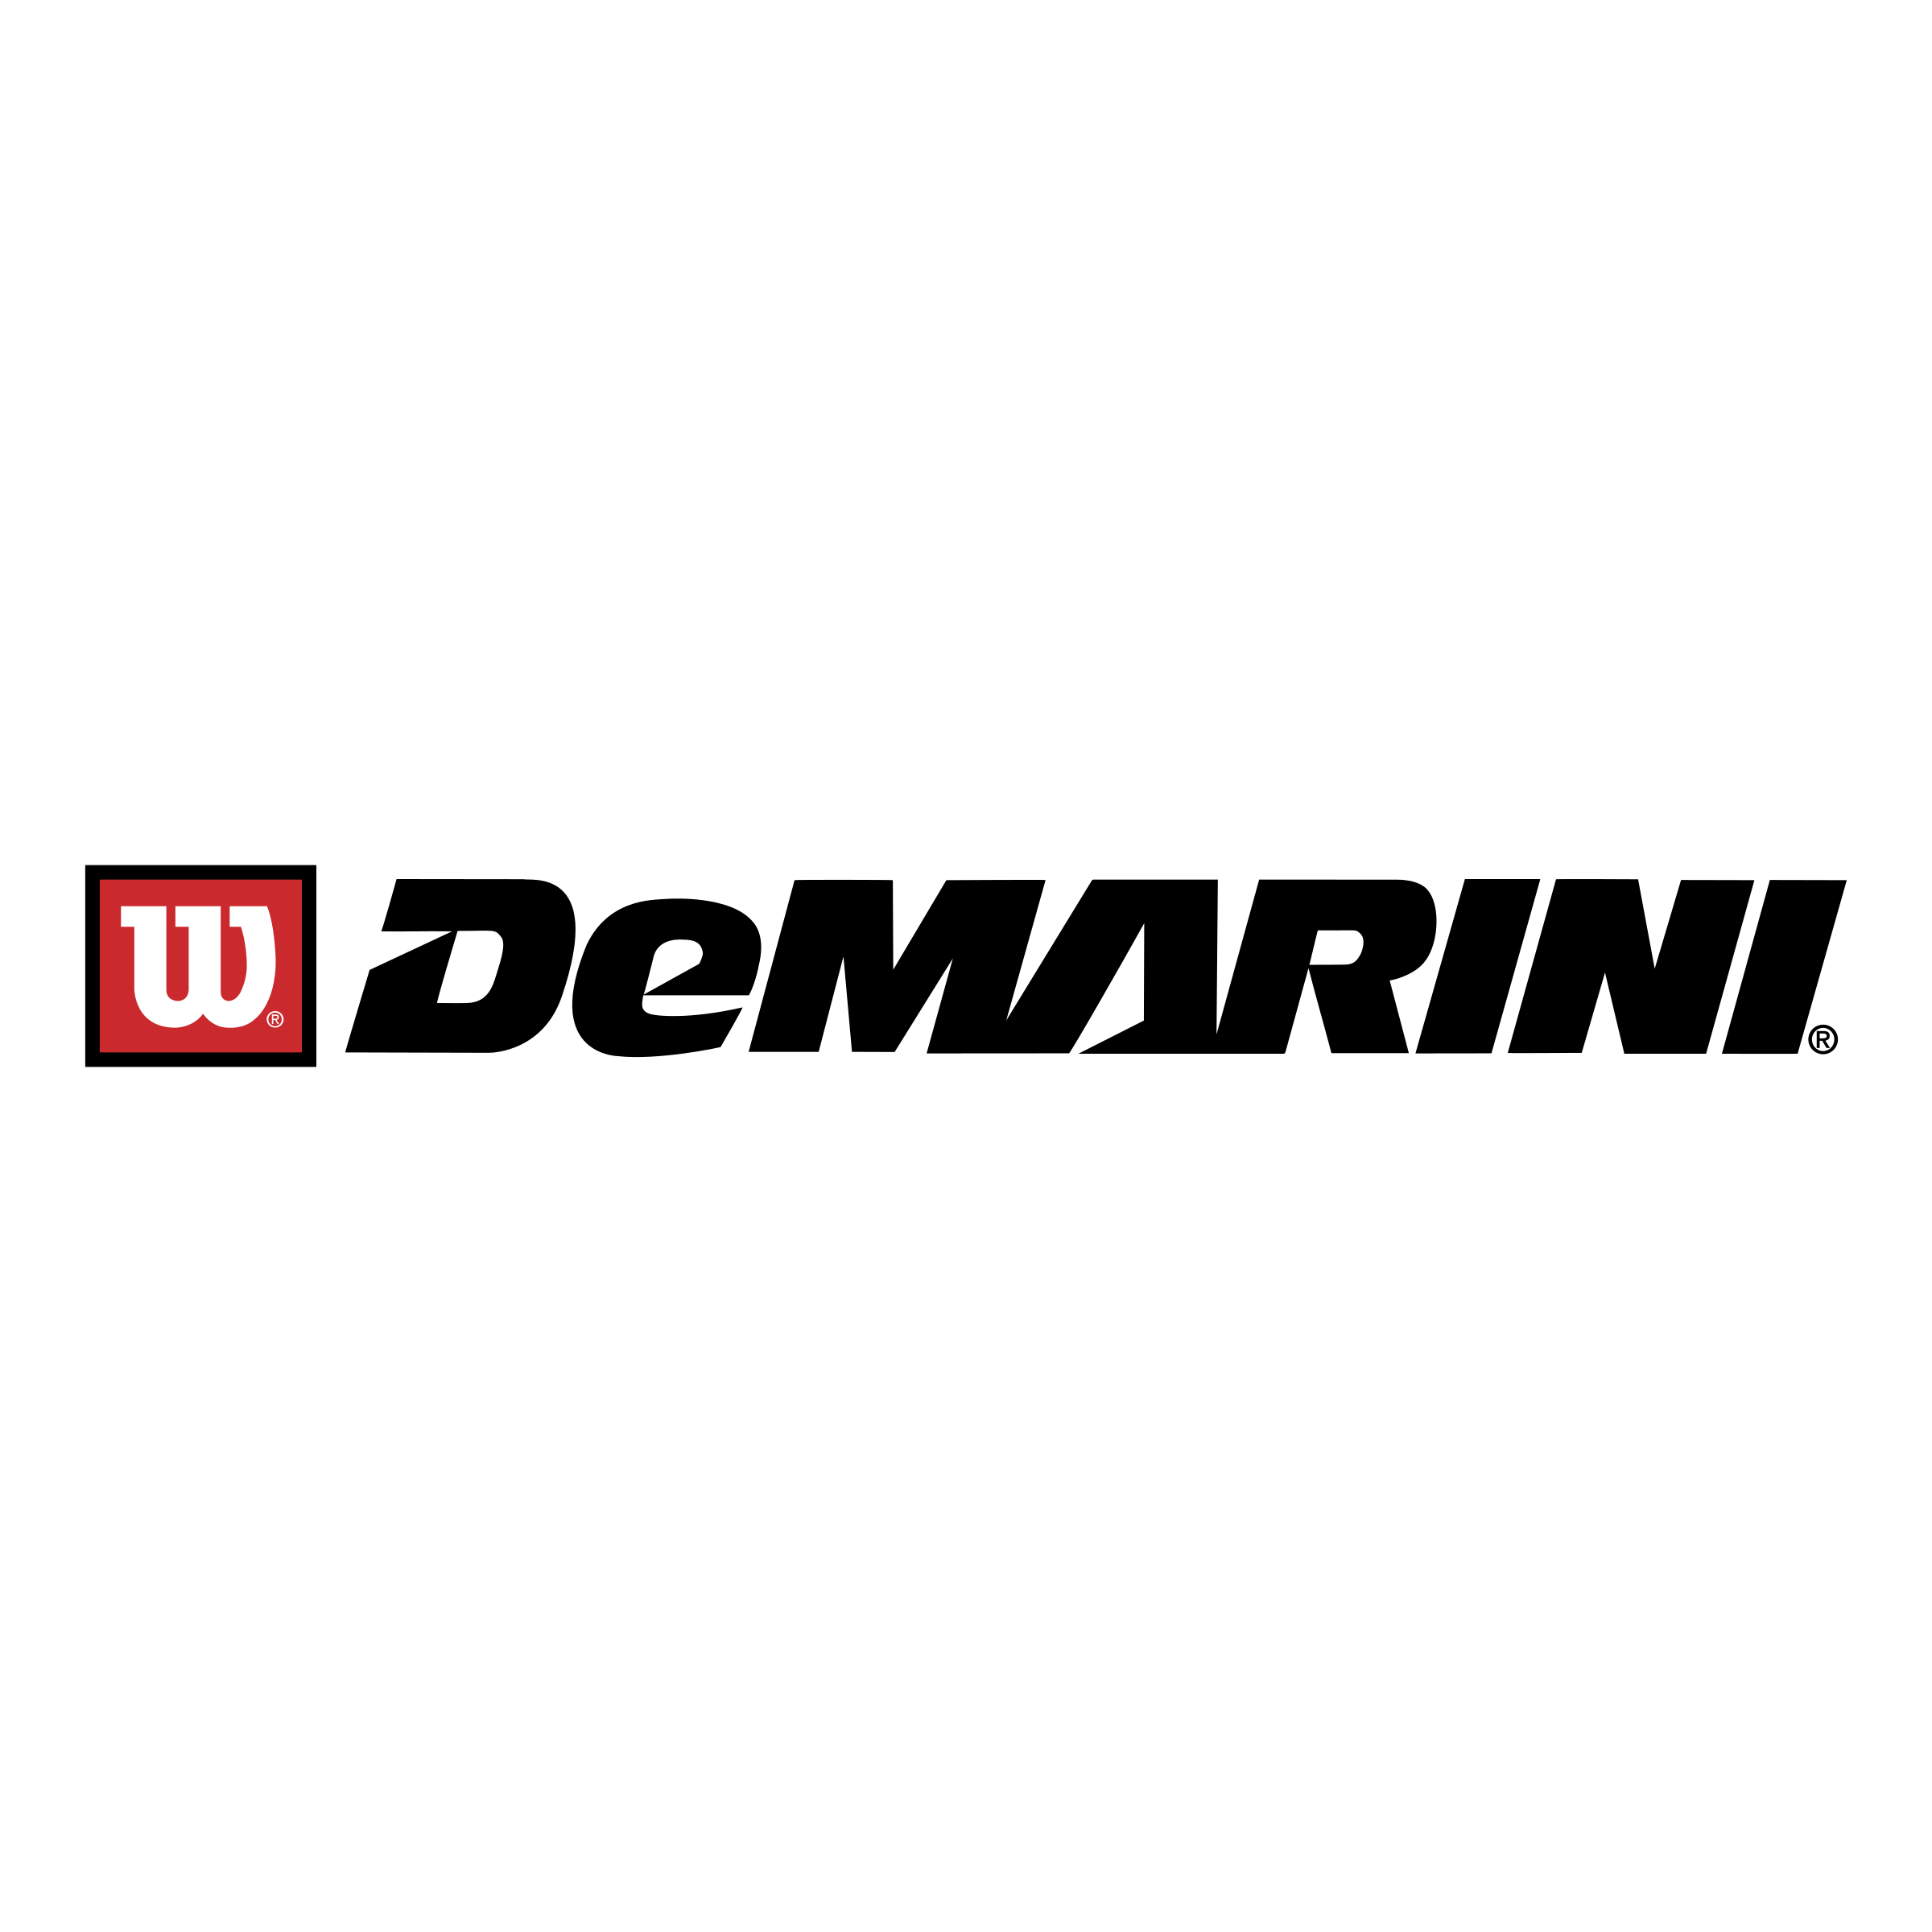 DeMarini Logo - DeMarini Logo PNG Transparent & SVG Vector